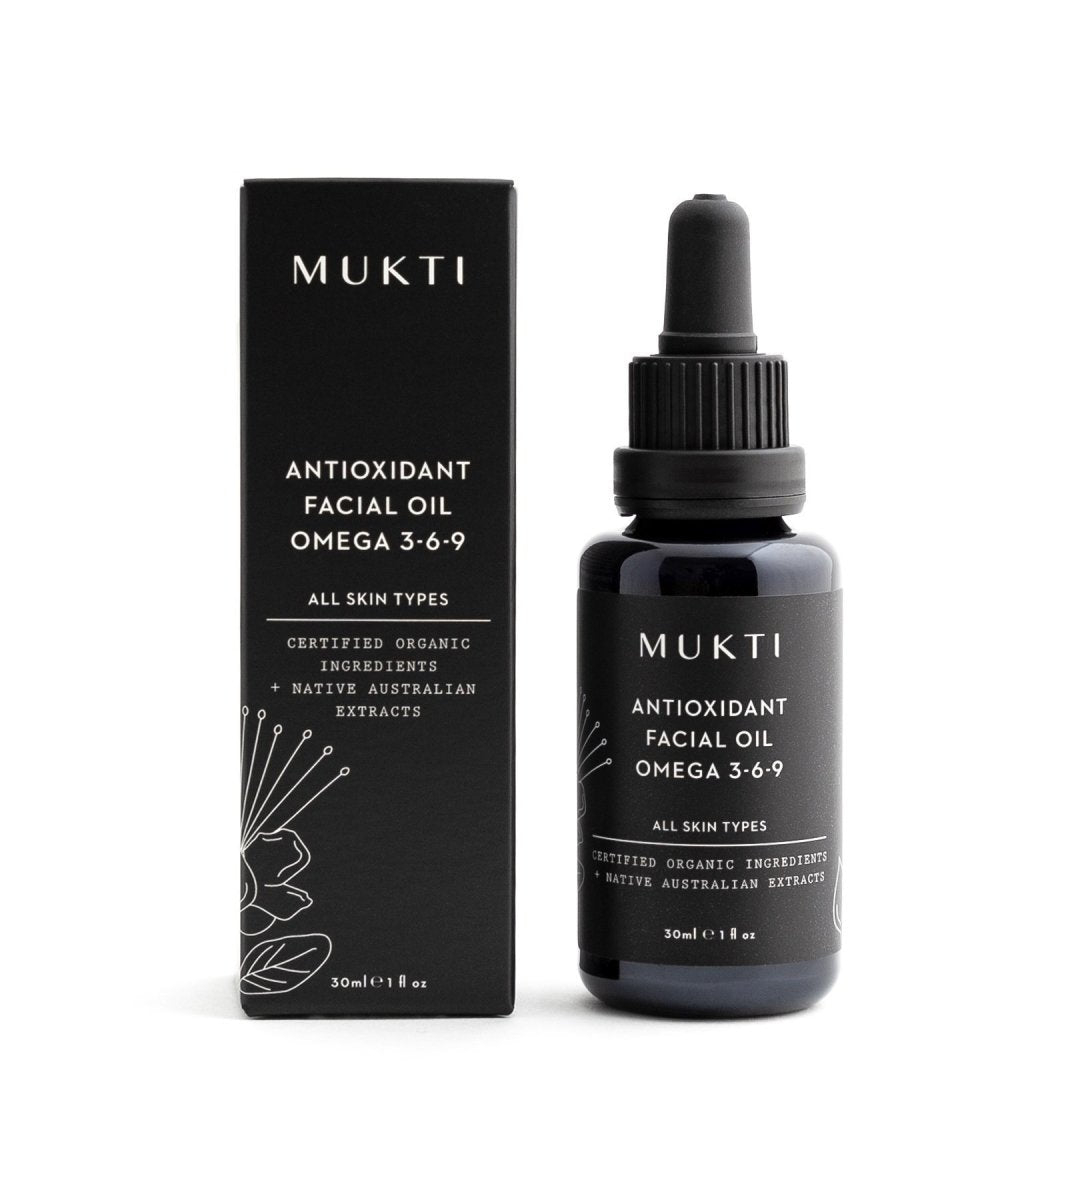 MUKTI Antioxidant Facial Oil Omega 3-6-9 有機抗氧化面部精華油 [30ml] - MINT Organics